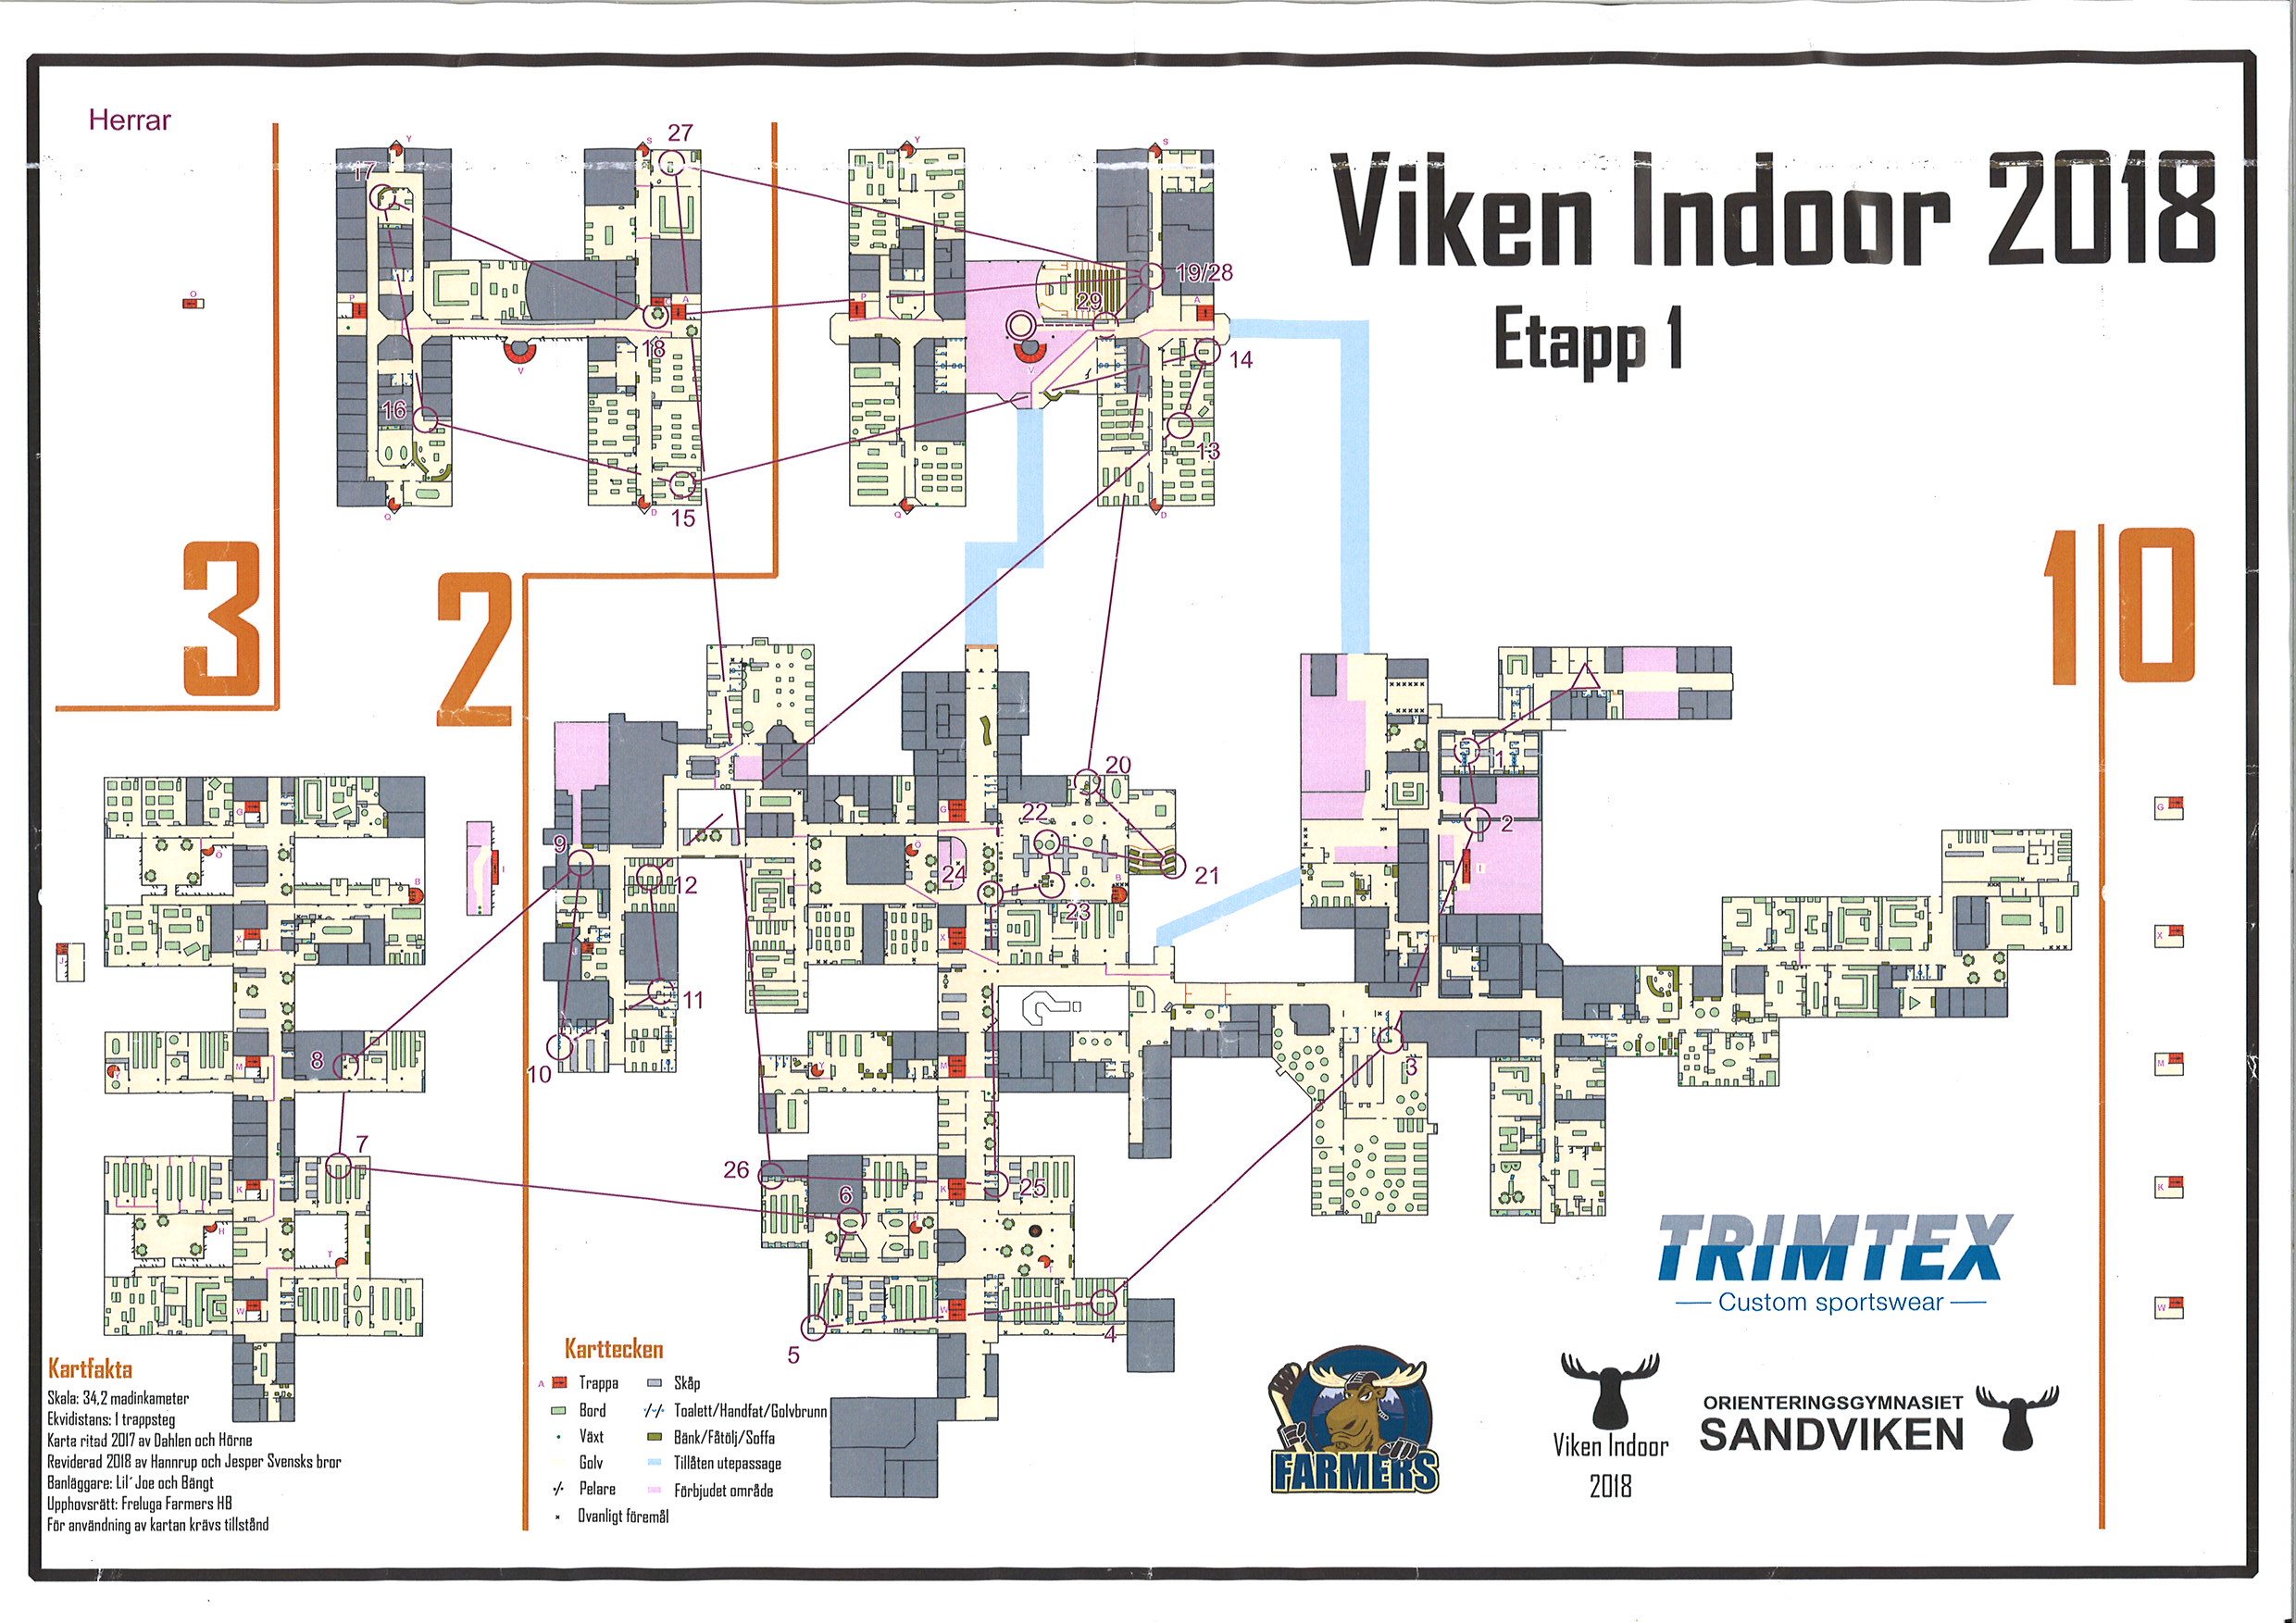 Viken Indoor E1 Herrar (2018-11-17)